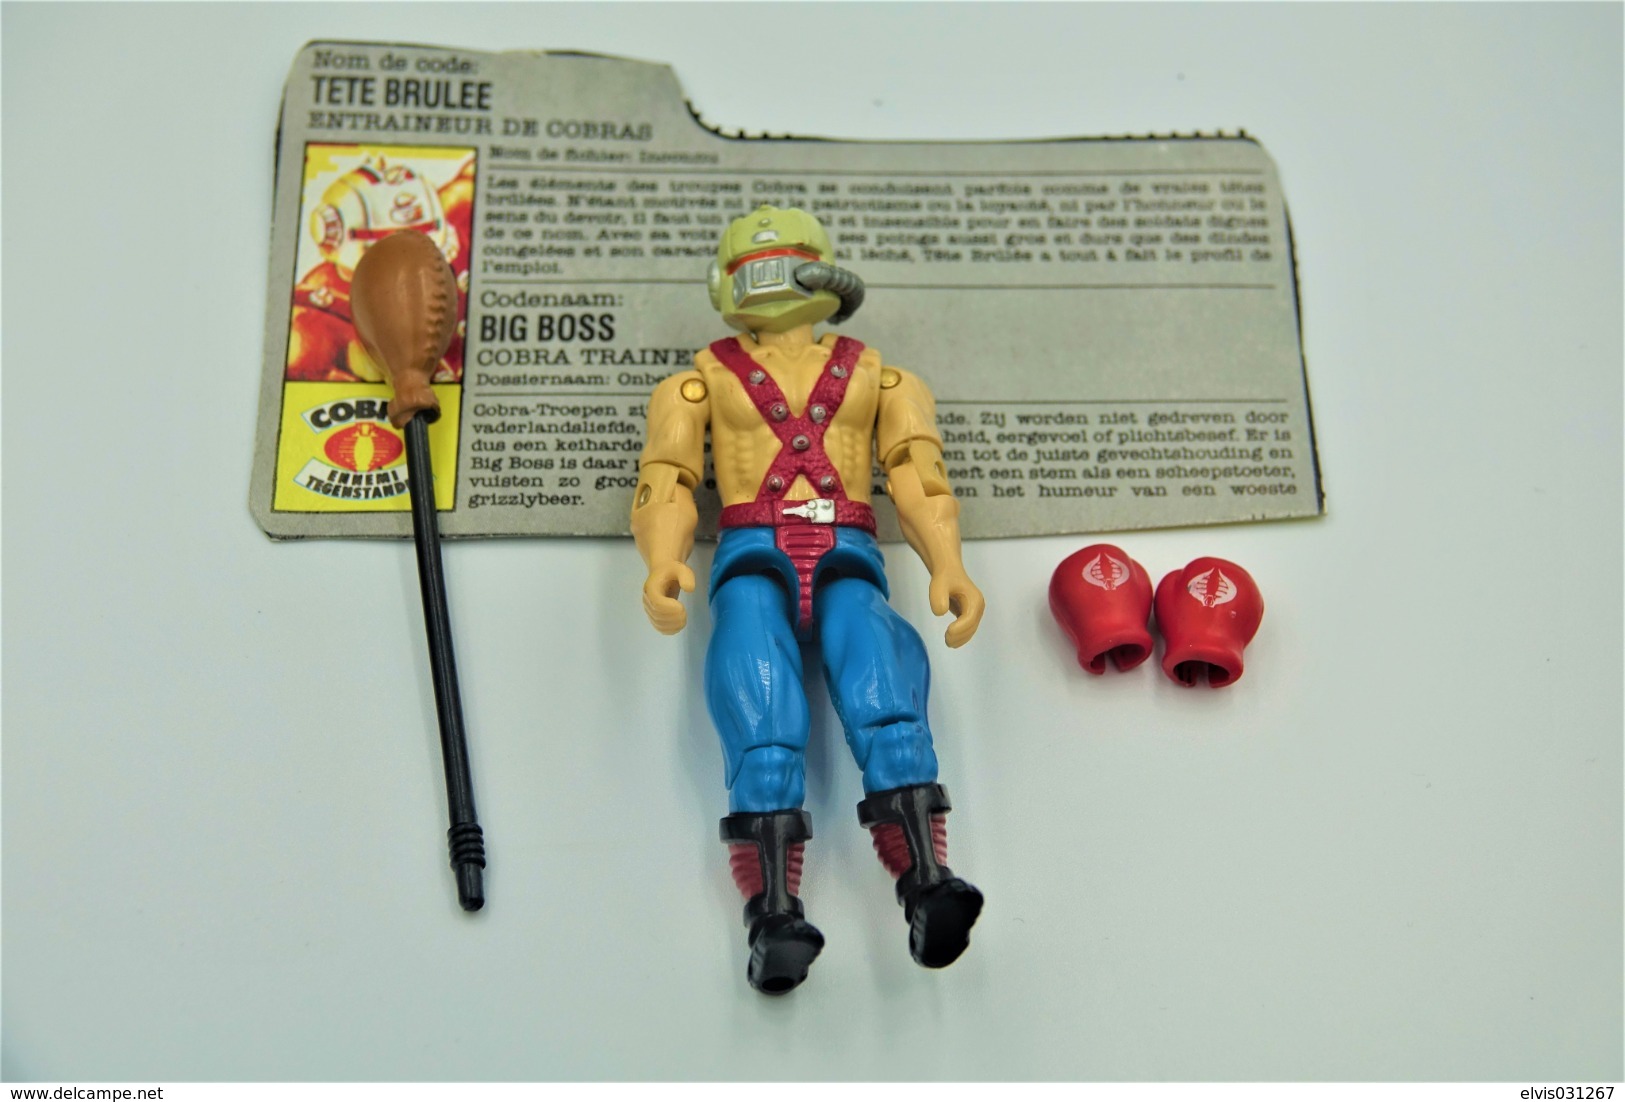 Vintage ACTION FIGURE GI JOE : BIG BOA [Cobra Trainer] With Accessories And Card- Original 1987 - Hasbro - GI JOE - Action Man